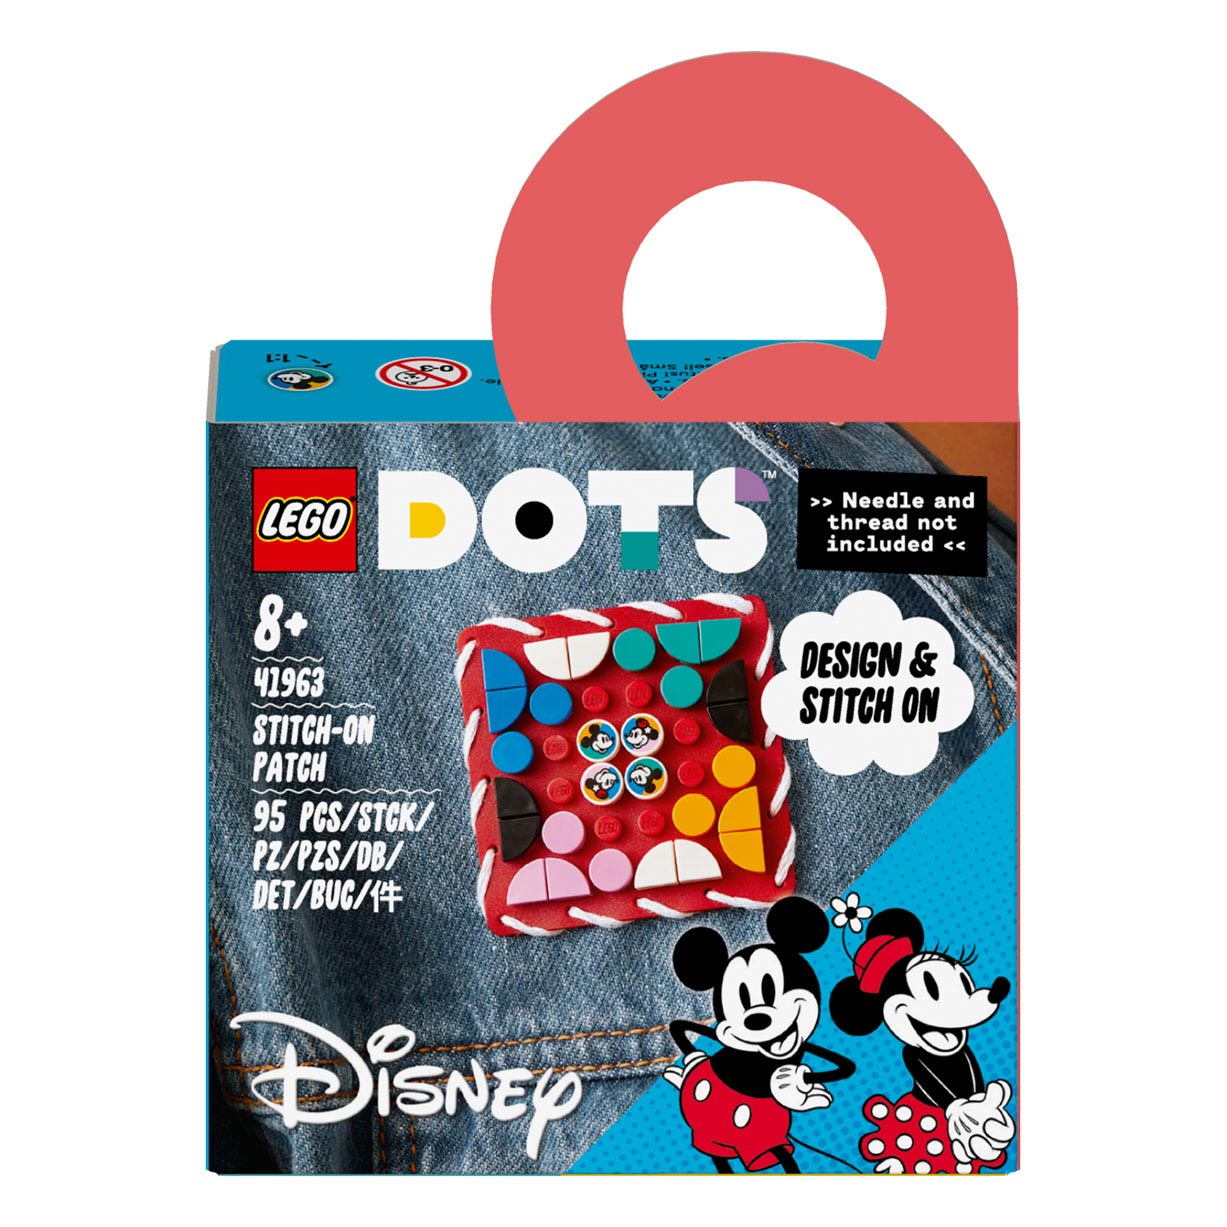 LEGO DOTS 41963 Mickey & Minnie Mouse: Stitch-on patch